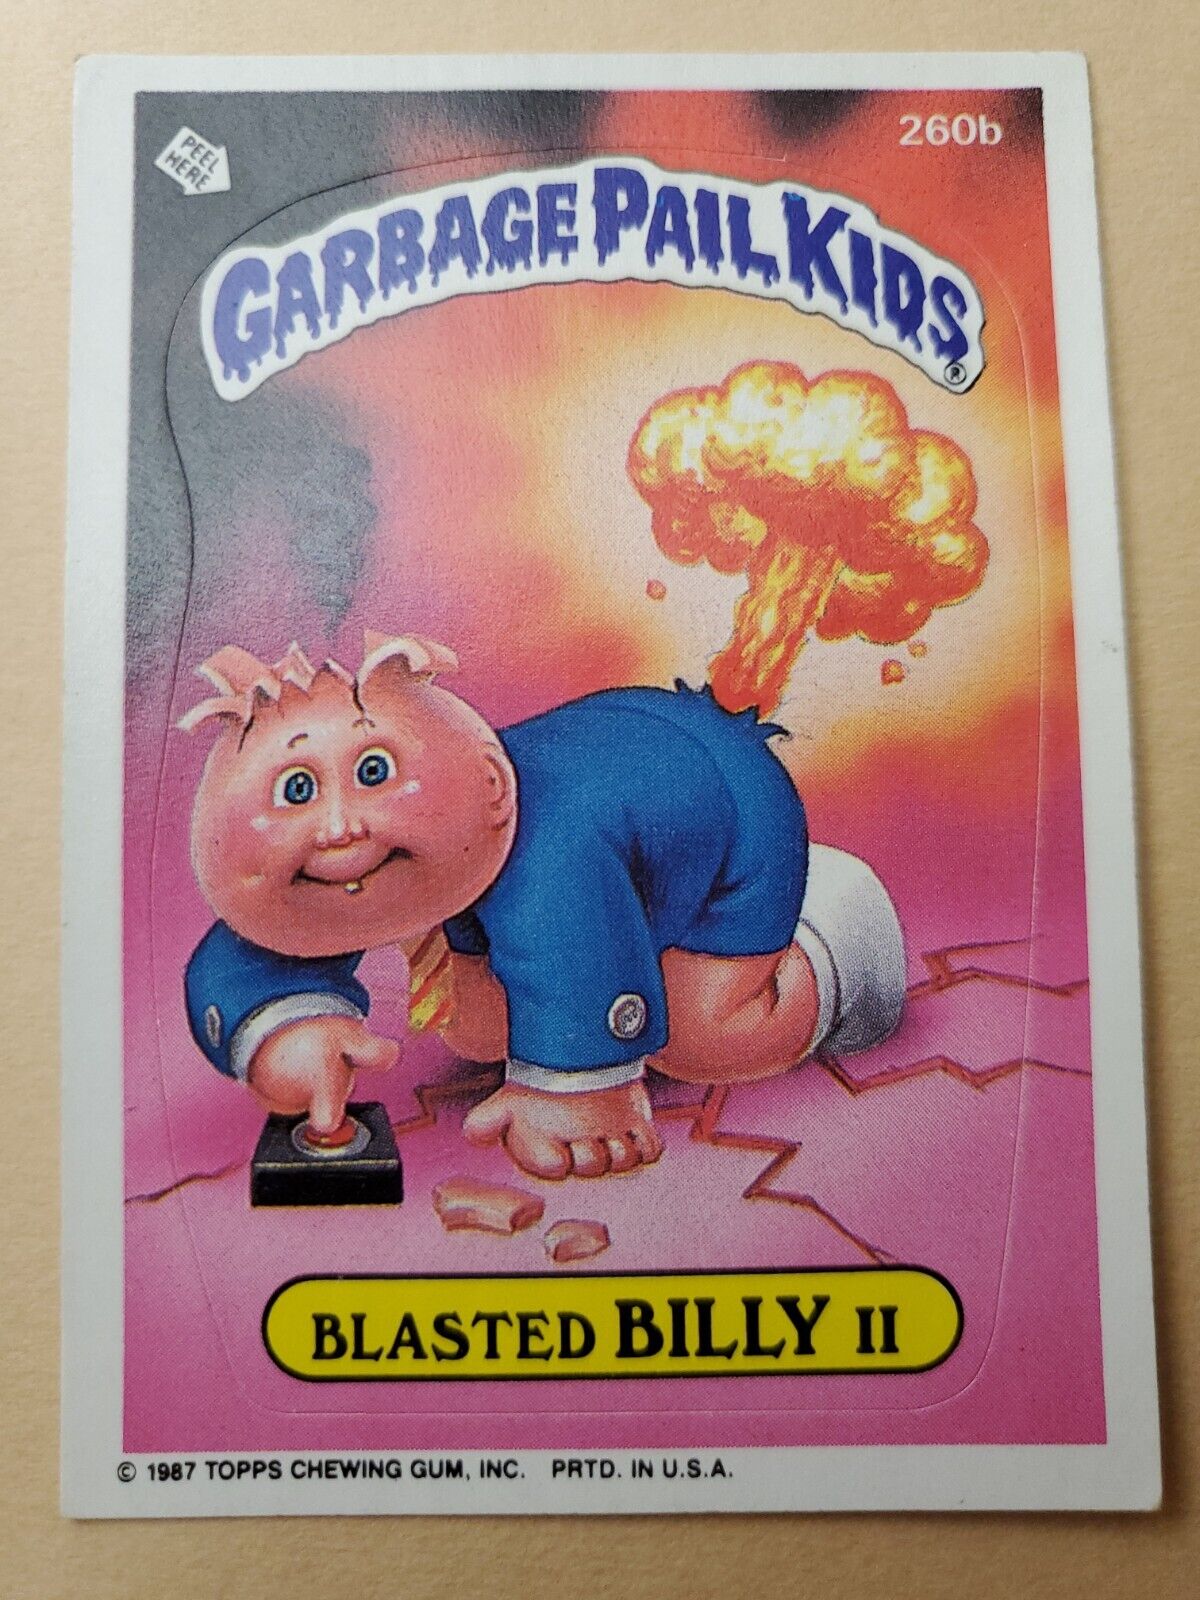 1987 Topps OS7 Garbage Pail Kids 260b BLASTED BILLY II Card PURPLE HEADER ERROR